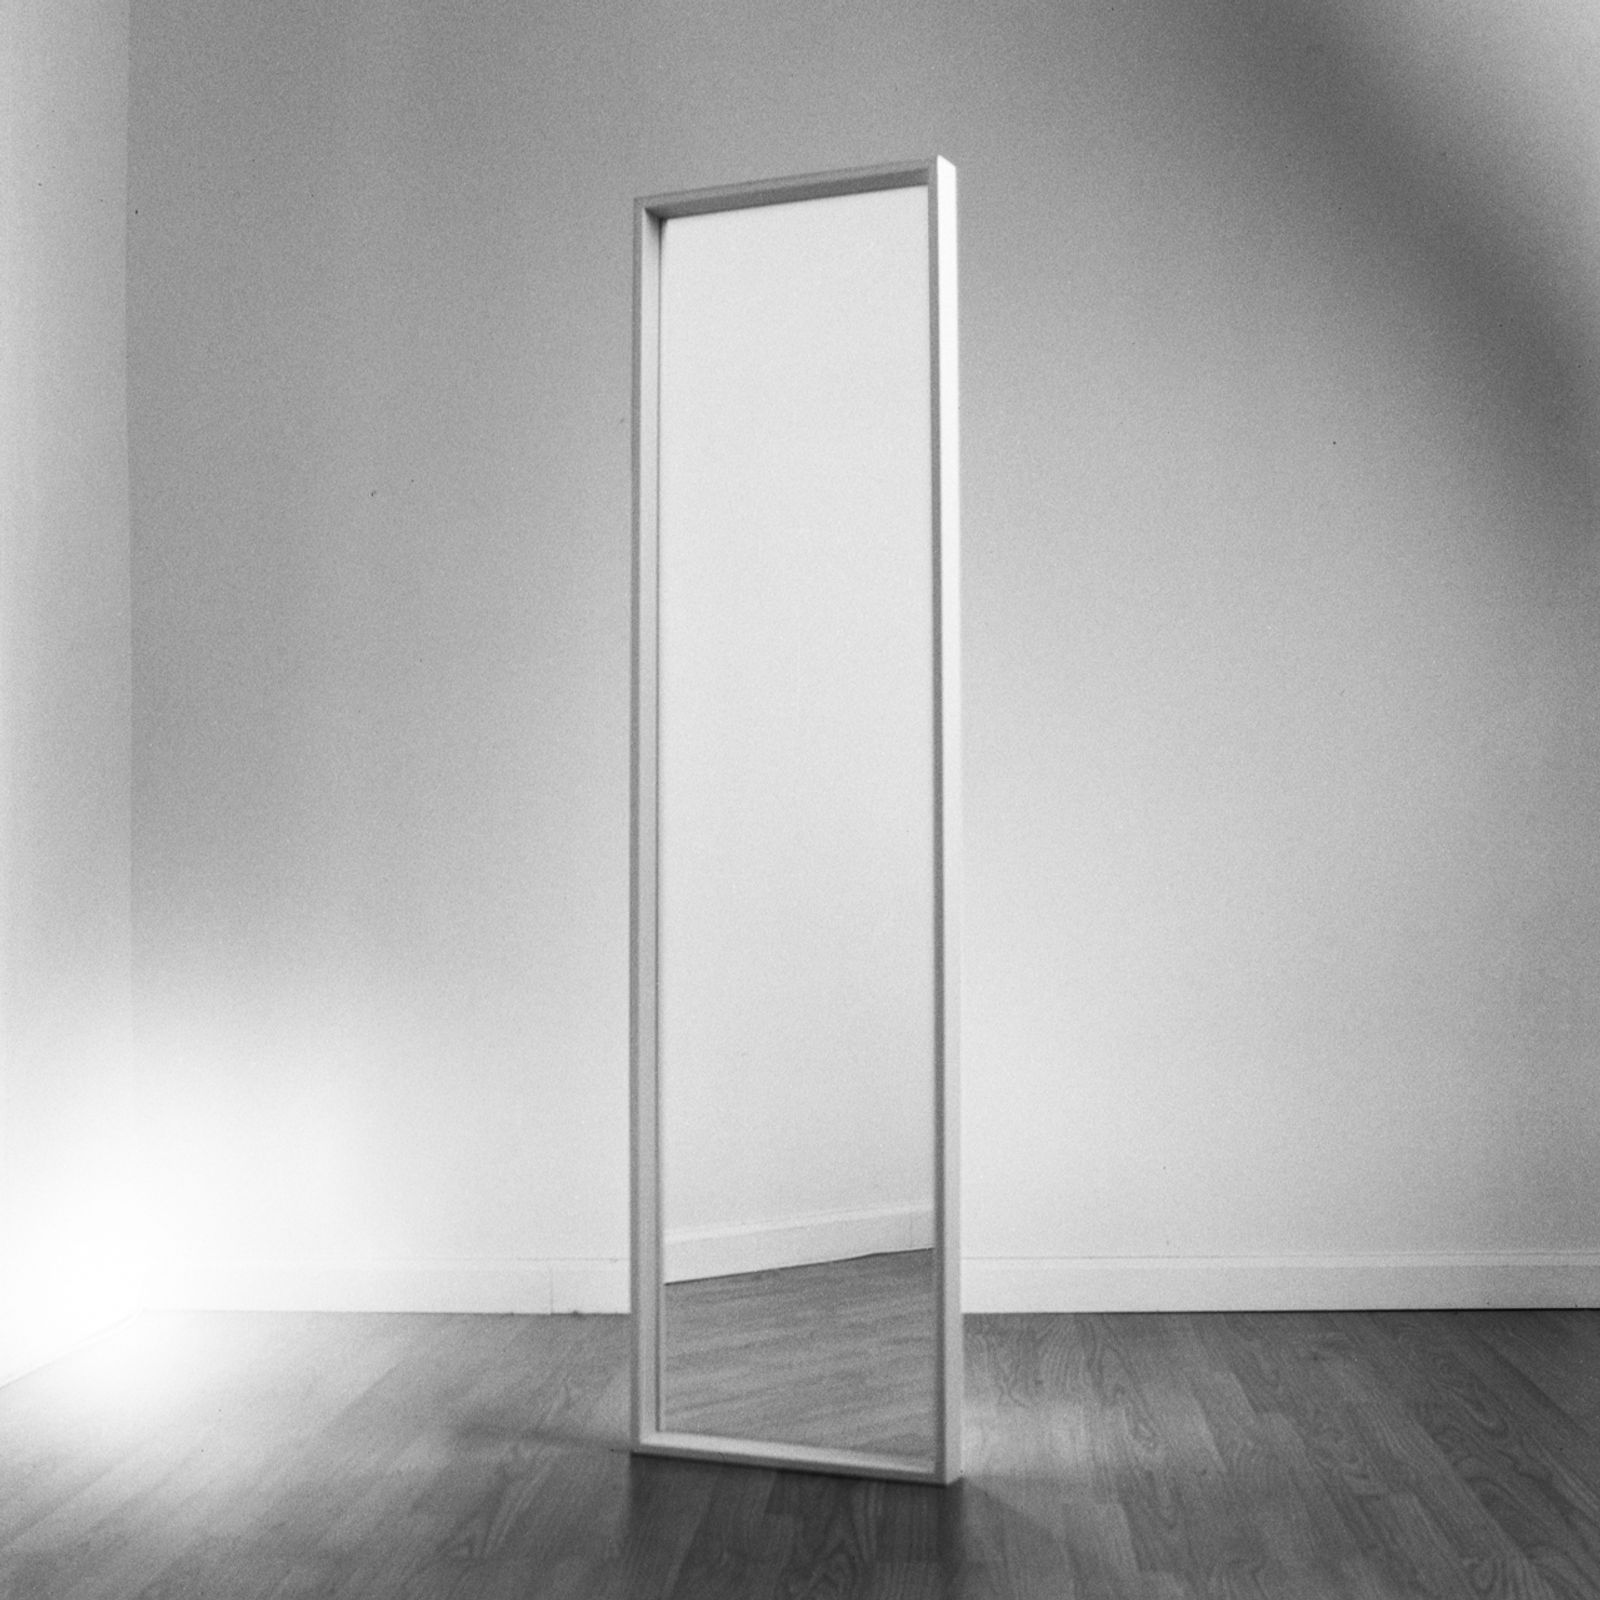 © Su Ji Lee - Untitled (Mirror Portal), 2022, 40x40 inches, Silver gelatin type LE print